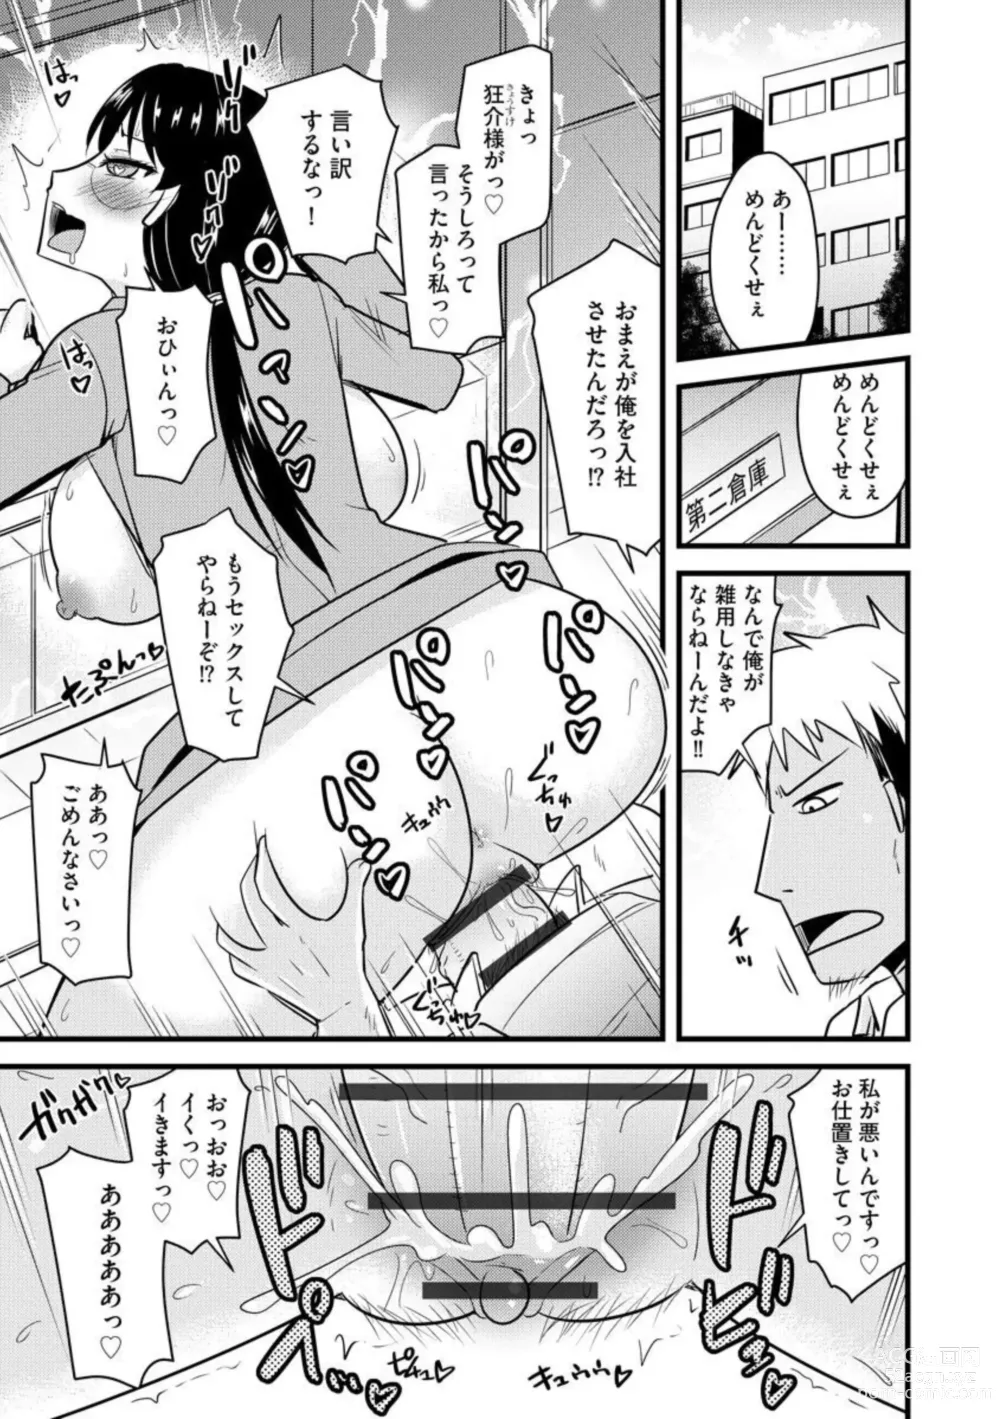 Page 3 of manga Fukushū NTR kanpanī 1